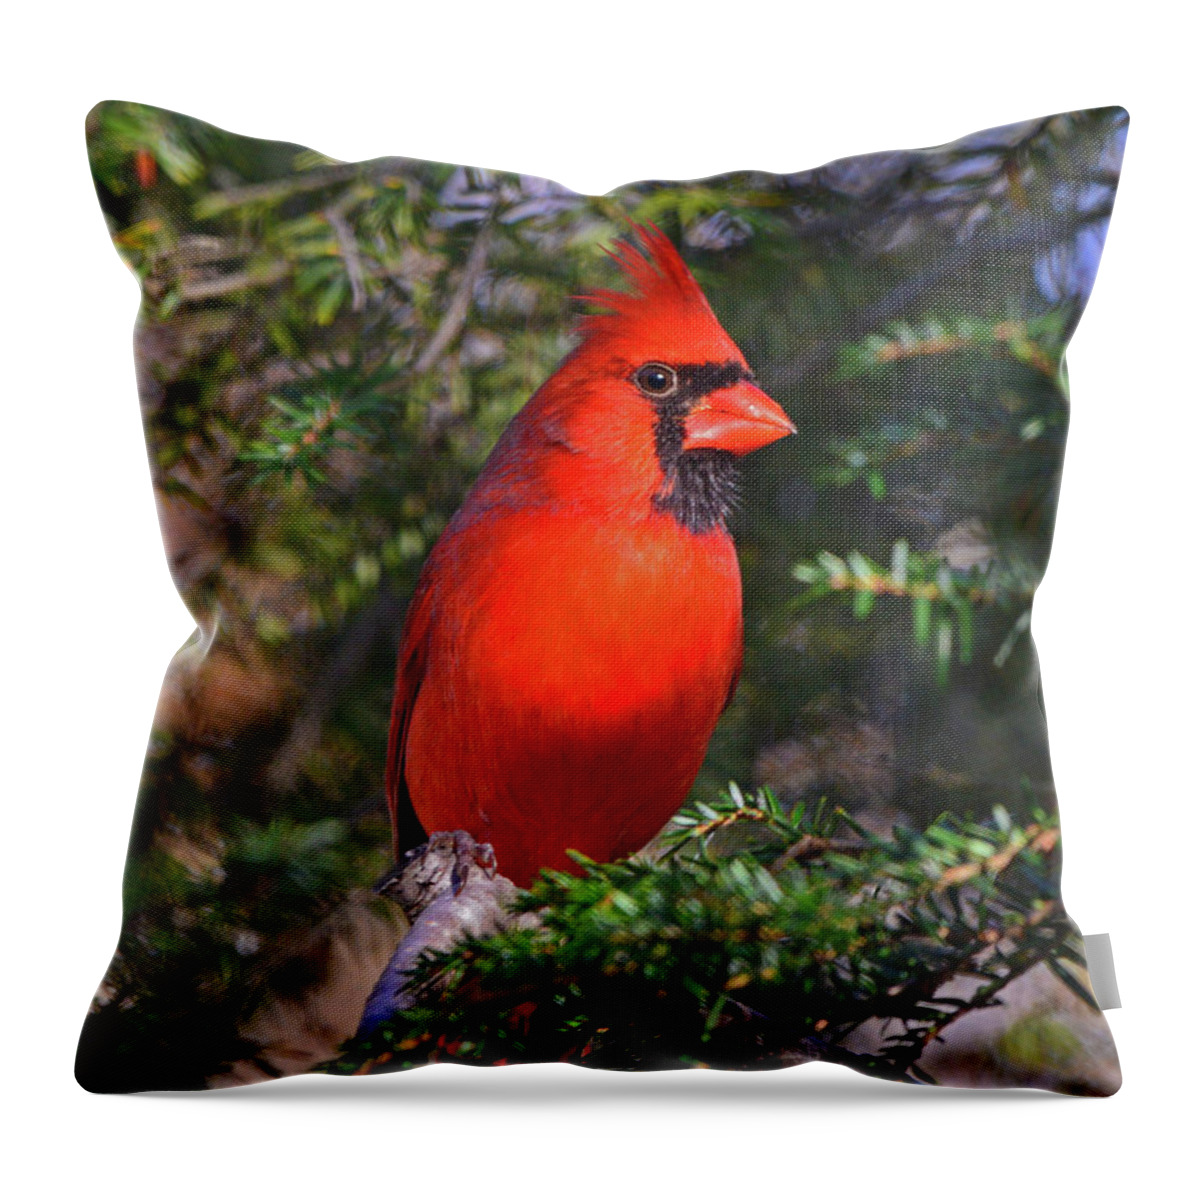 Northern Cardinal Throw Pillow featuring the photograph Northern Cardinal by Ken Stampfer